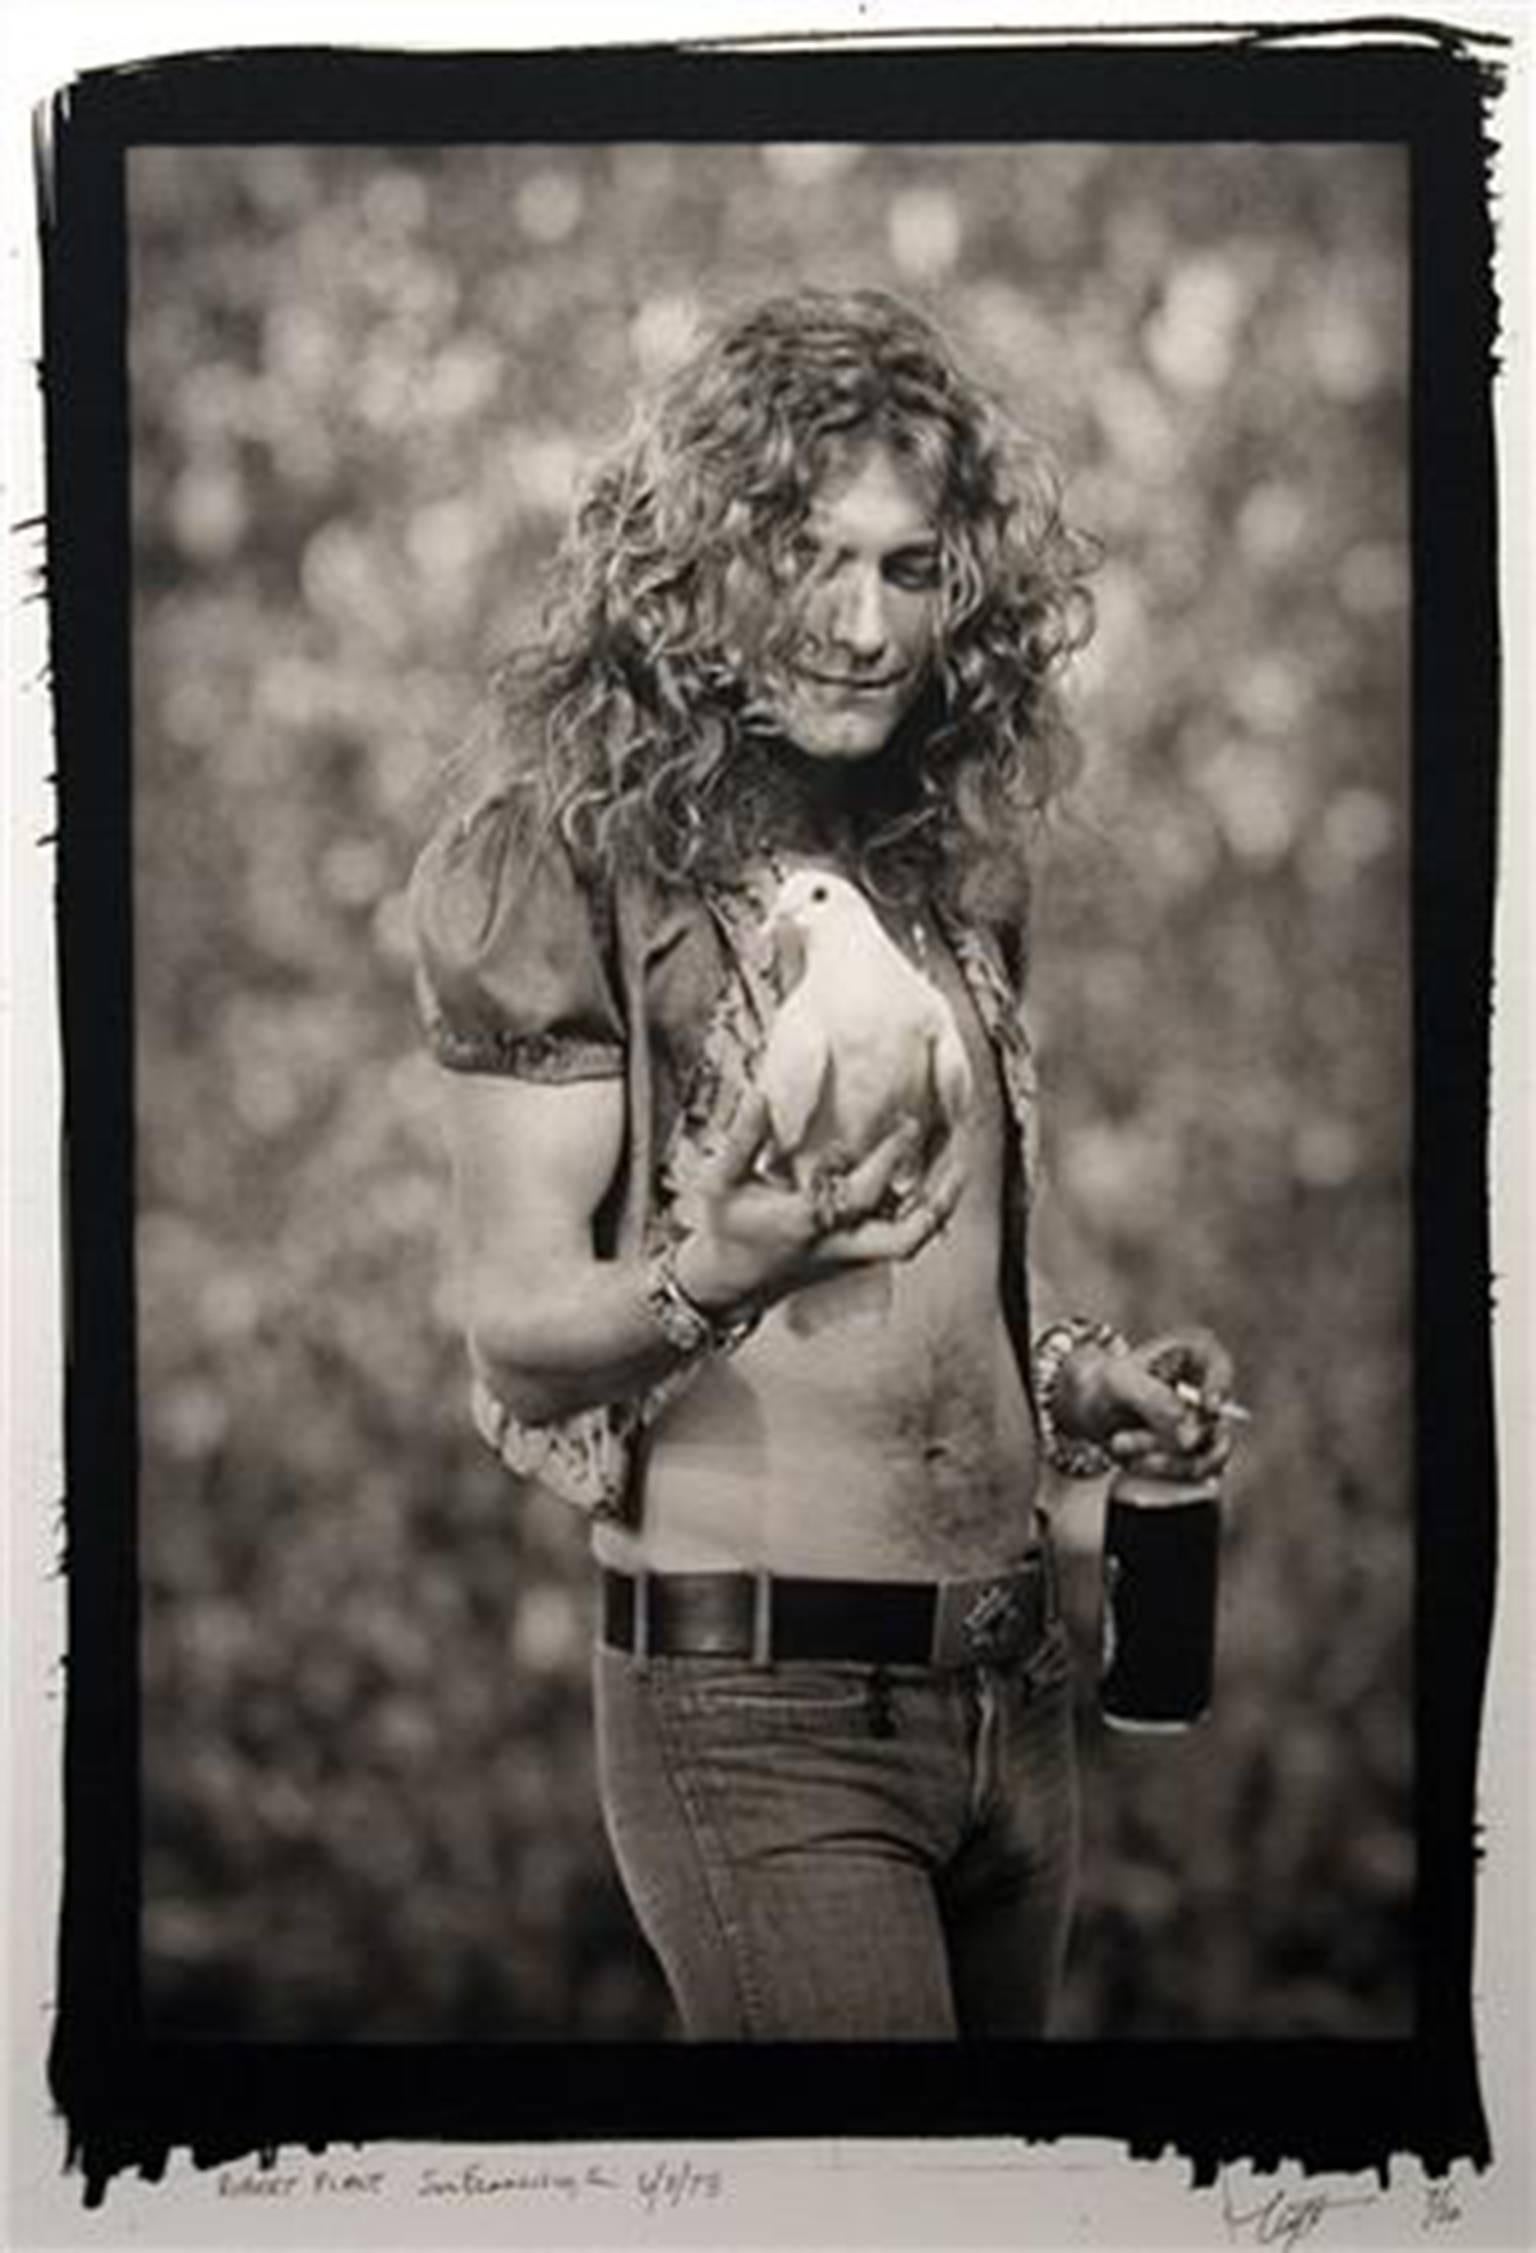 Neal Preston Portrait Photograph - Robert Plant, San Francisco, CA 1973